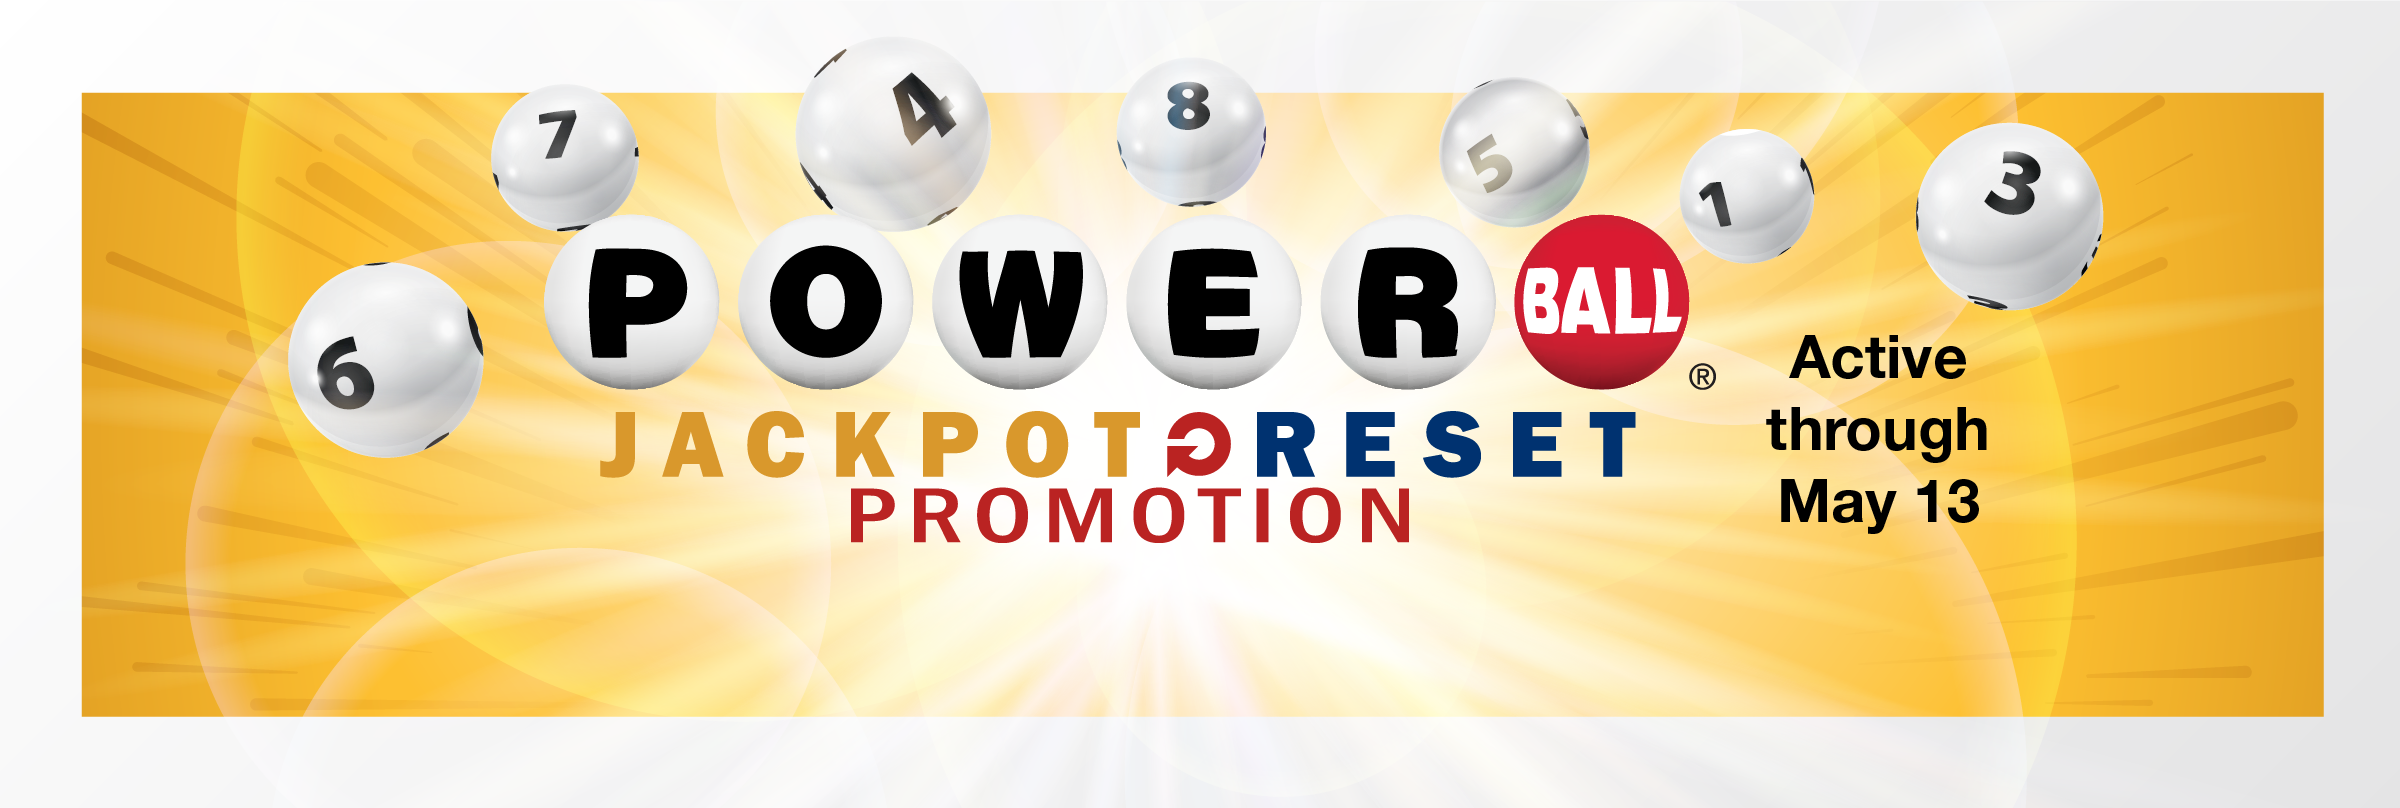 Powerball Jackpot Reset 51324